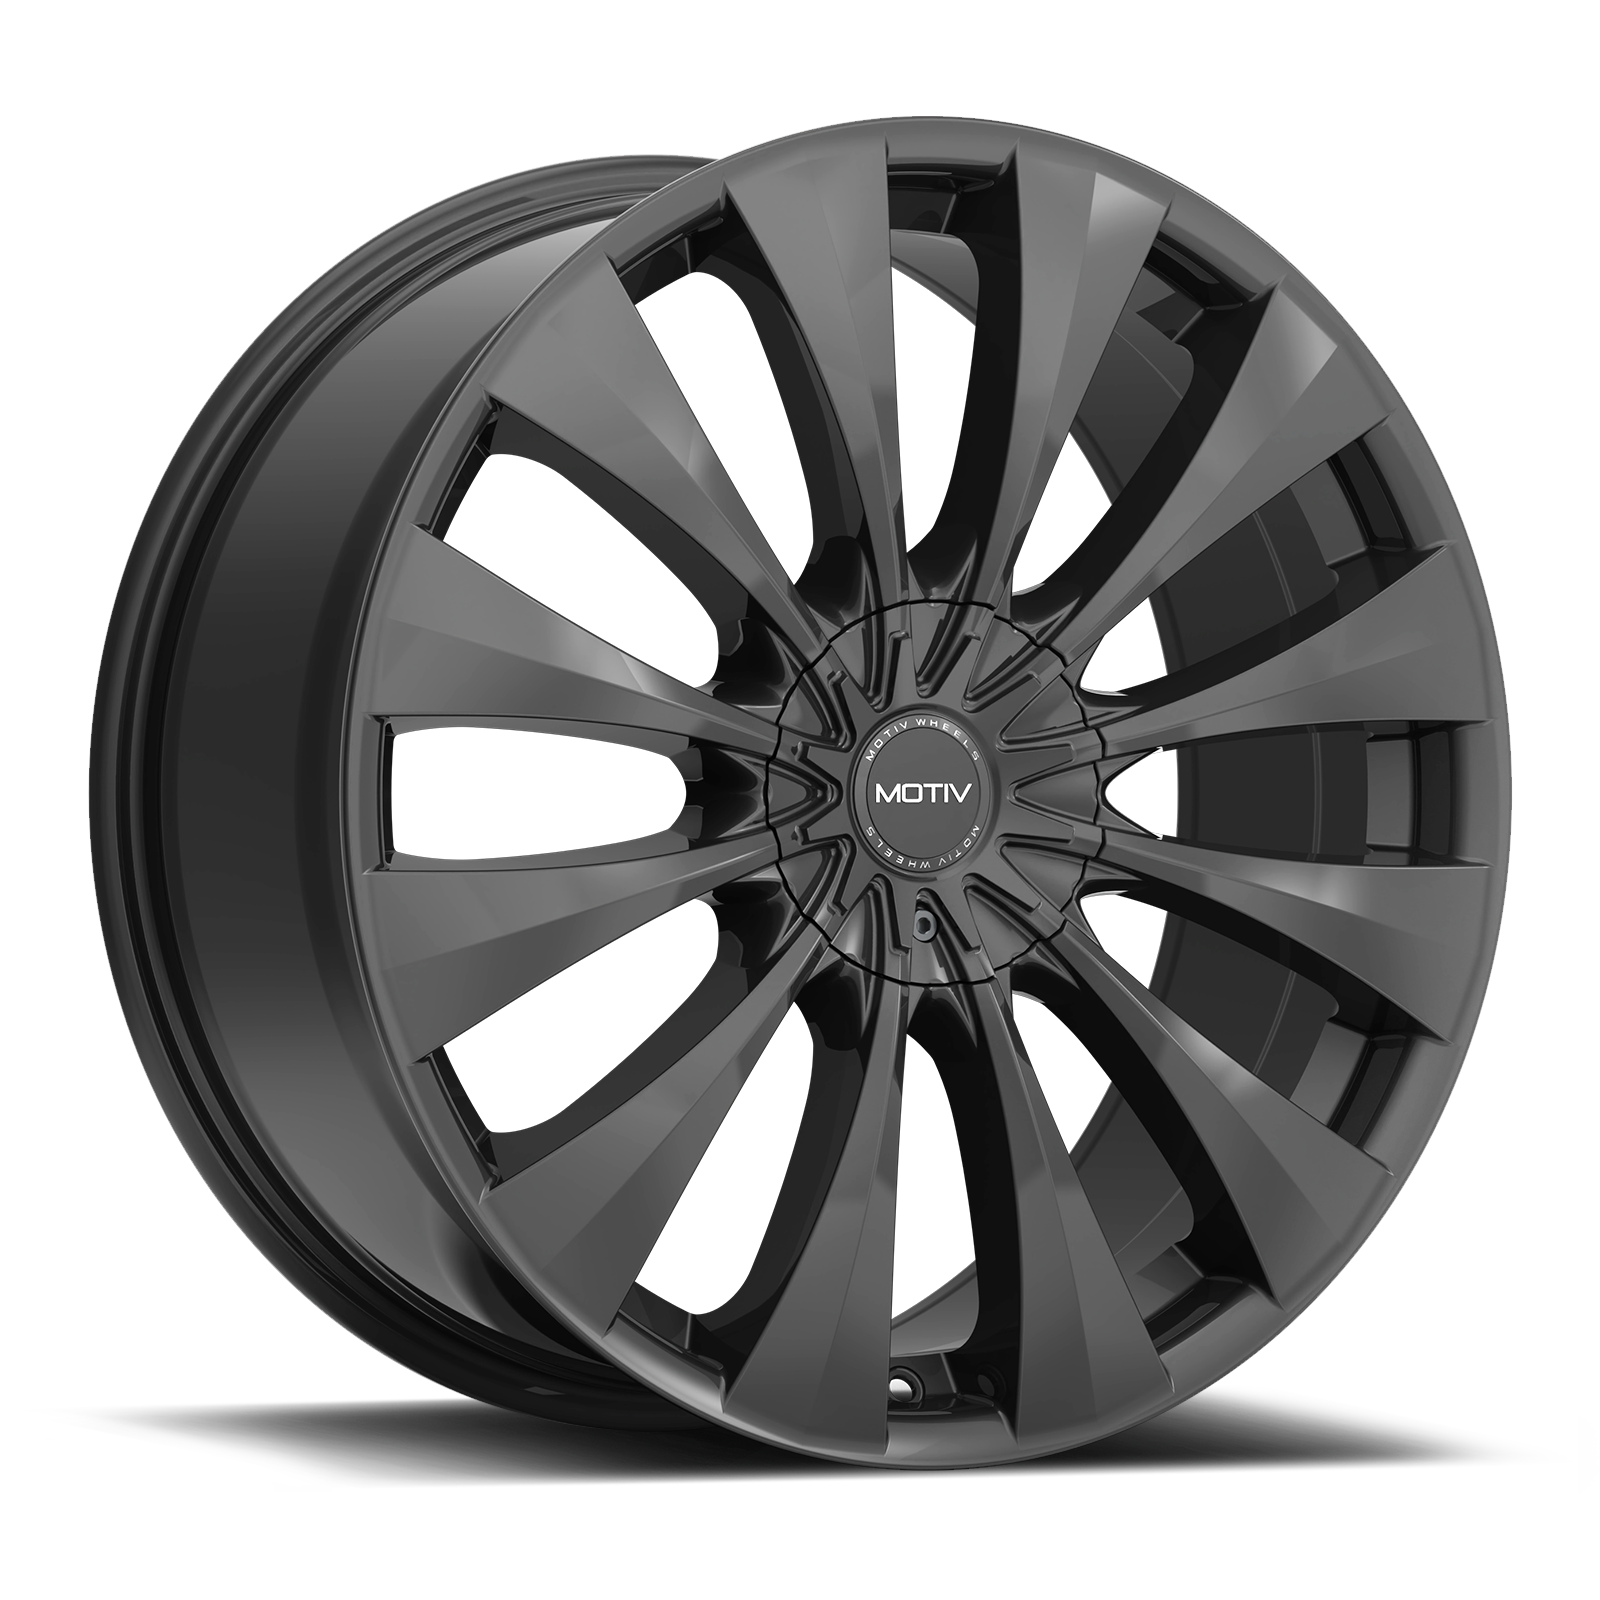 Wheel Image 